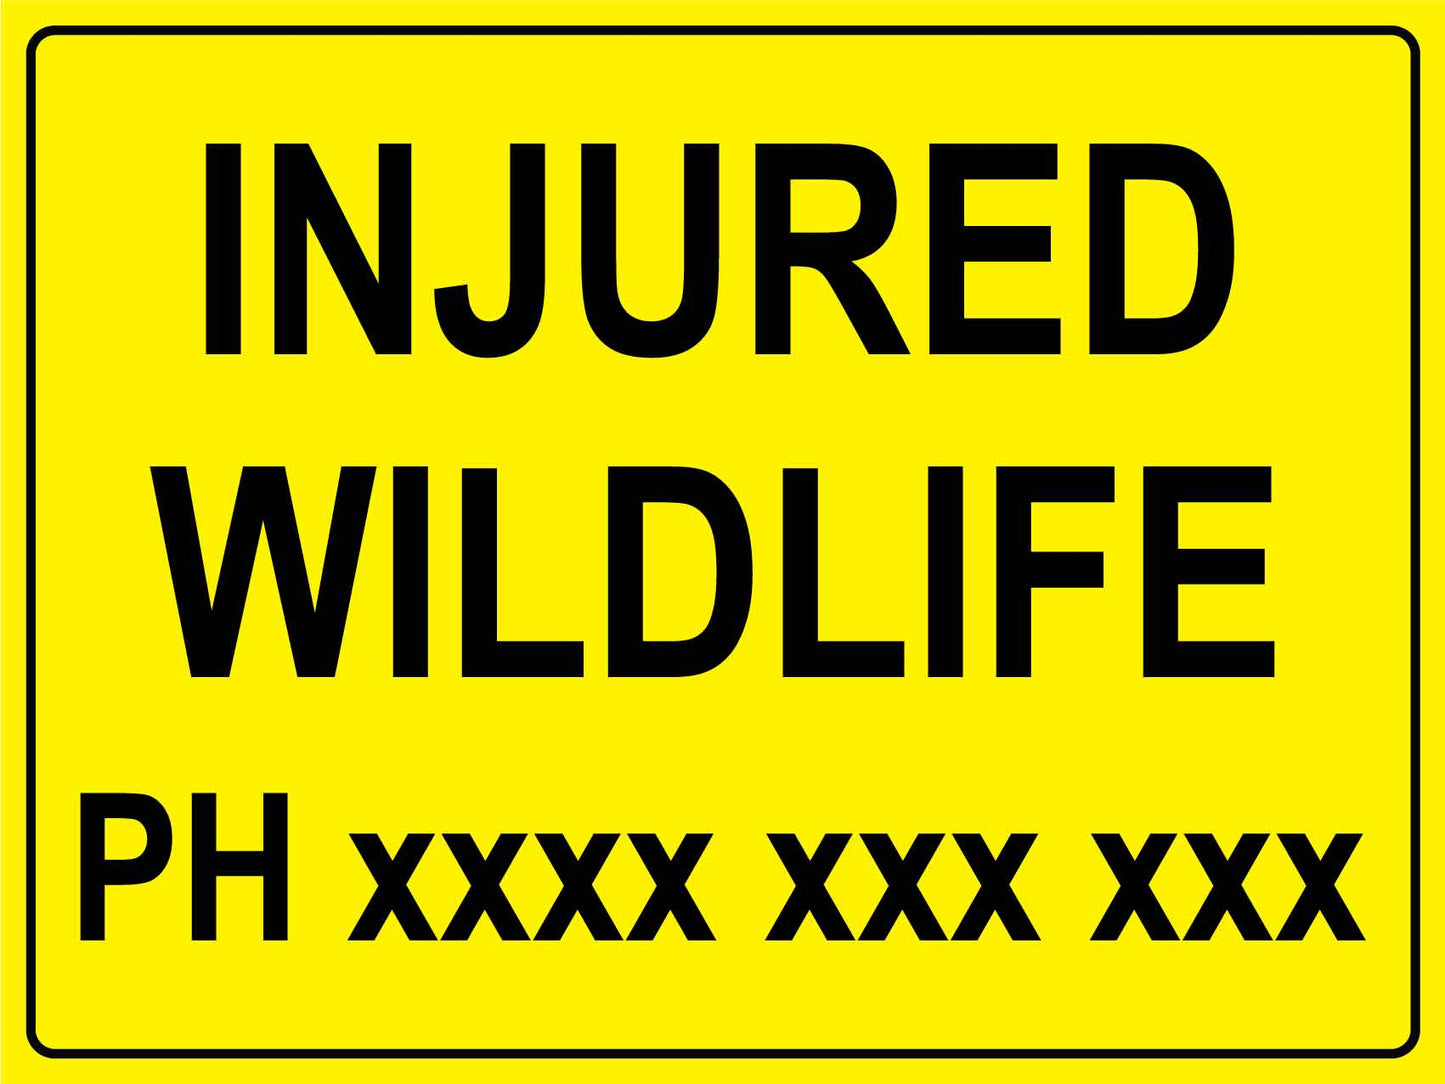 Injured Wildlife Custom Bright Yellow Sign